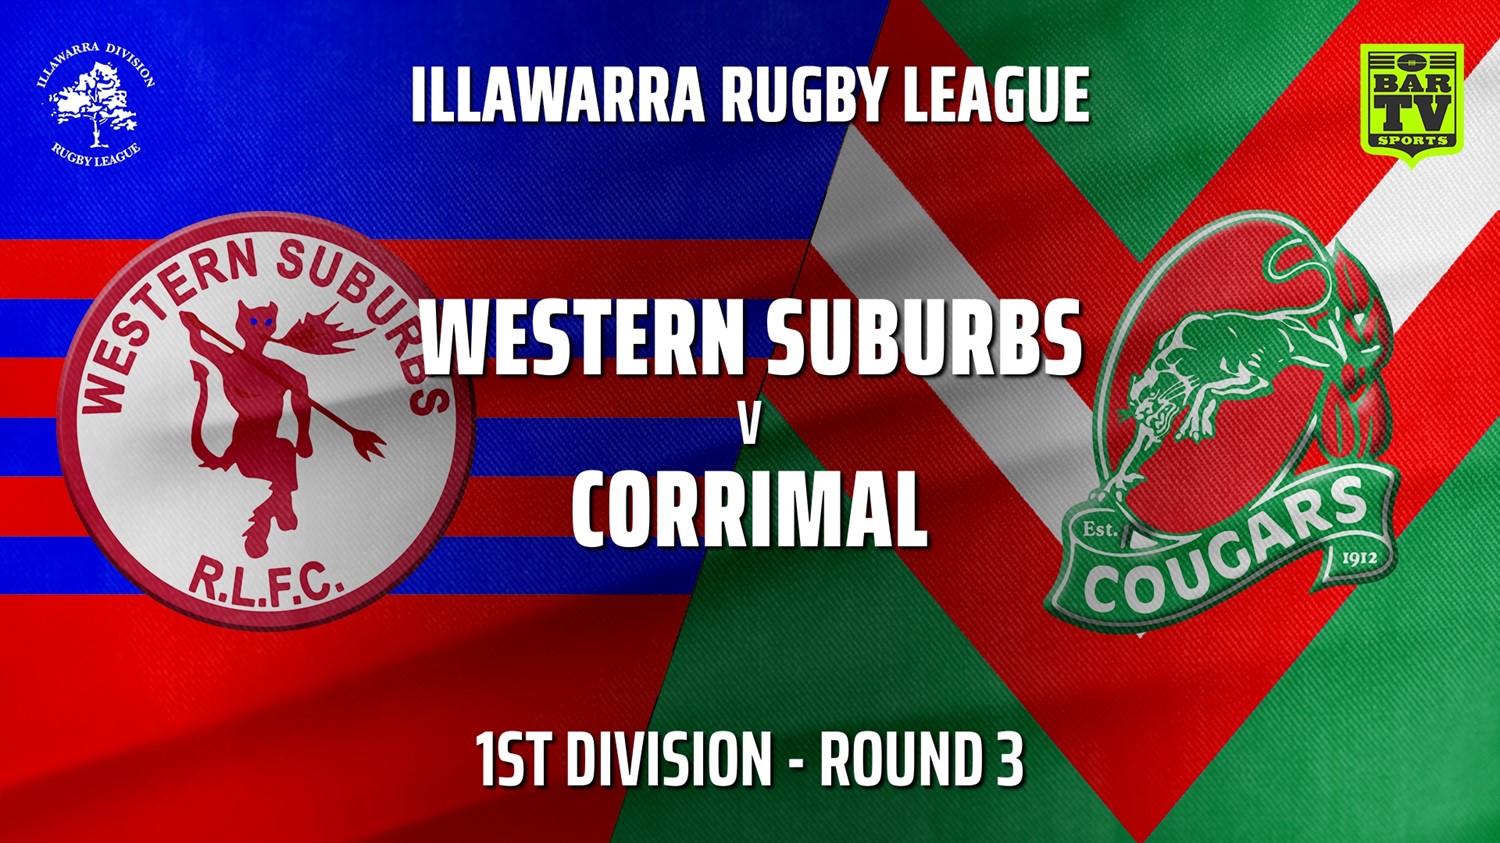 210421-IRL Round 3 - 1st Division - Western Suburbs Devils v Corrimal Cougars Minigame Slate Image